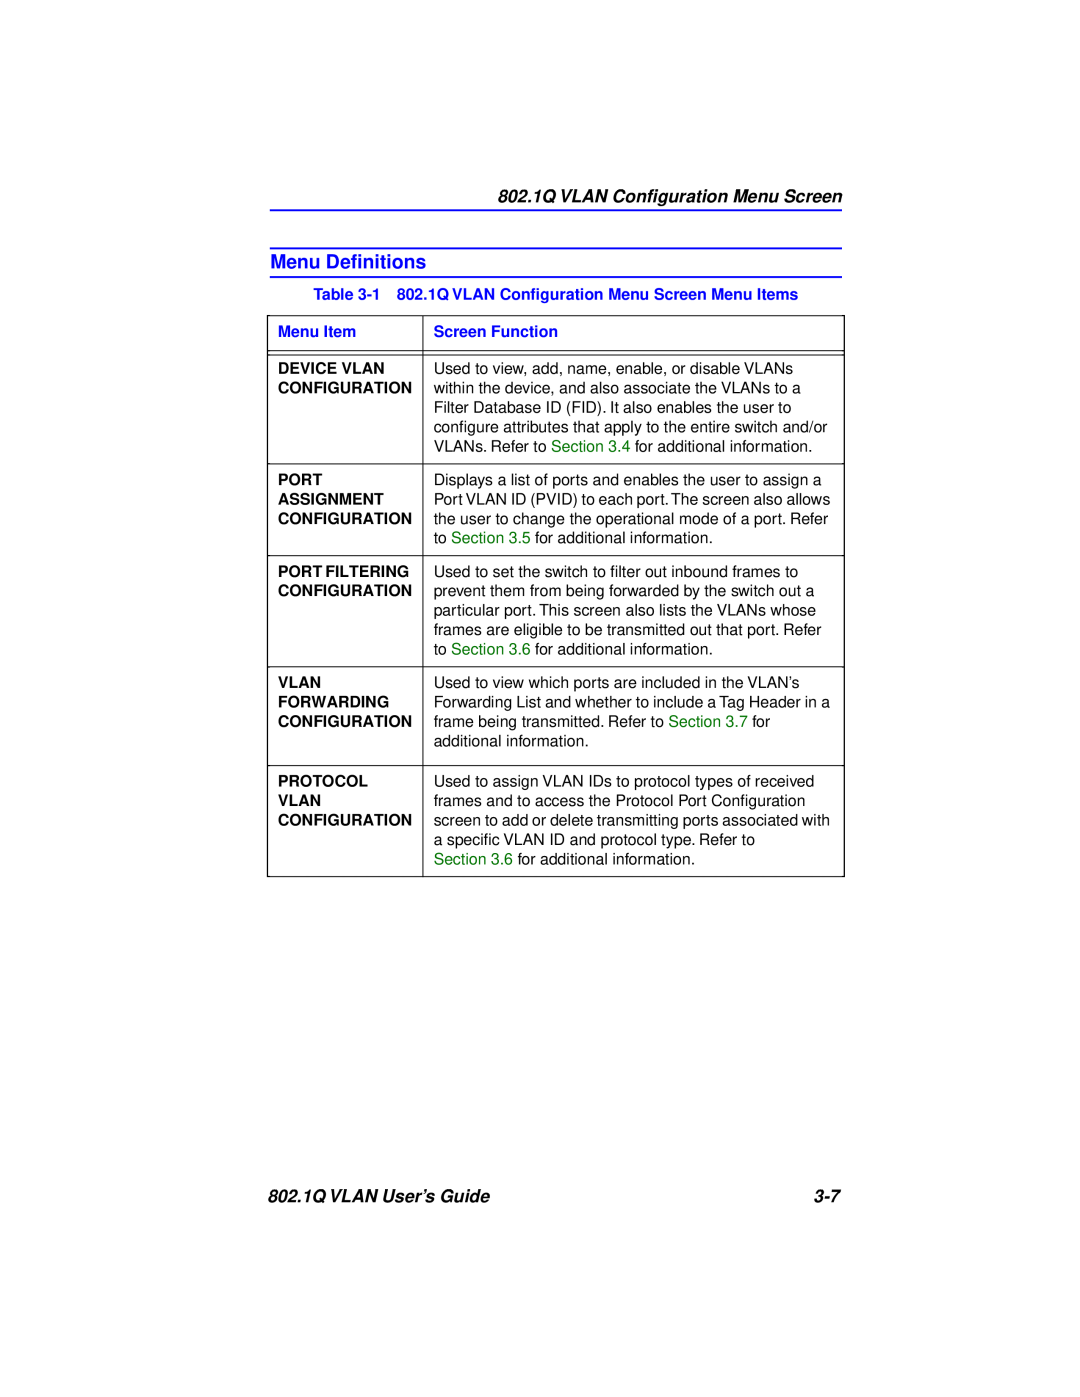 Cabletron Systems manual Menu Deﬁnitions, 802.1Q VLAN Conﬁguration Menu Screen, 802.1Q VLAN User’s Guide, Menu Item 